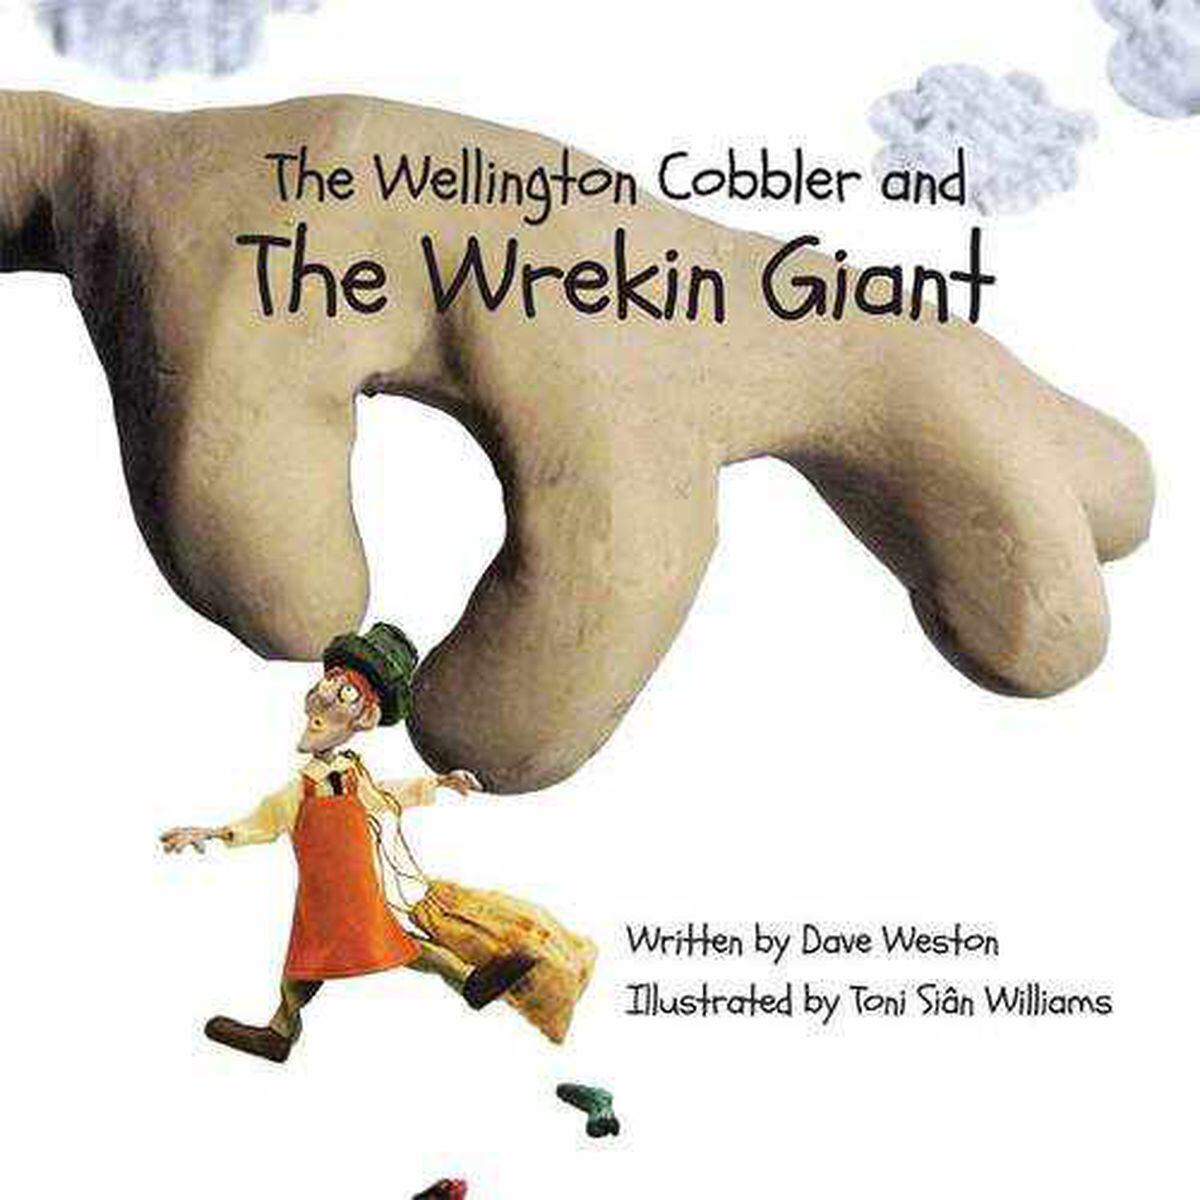 Toni Sian Williams illustrated The Wellington Cobbler and The Wrekin Giant